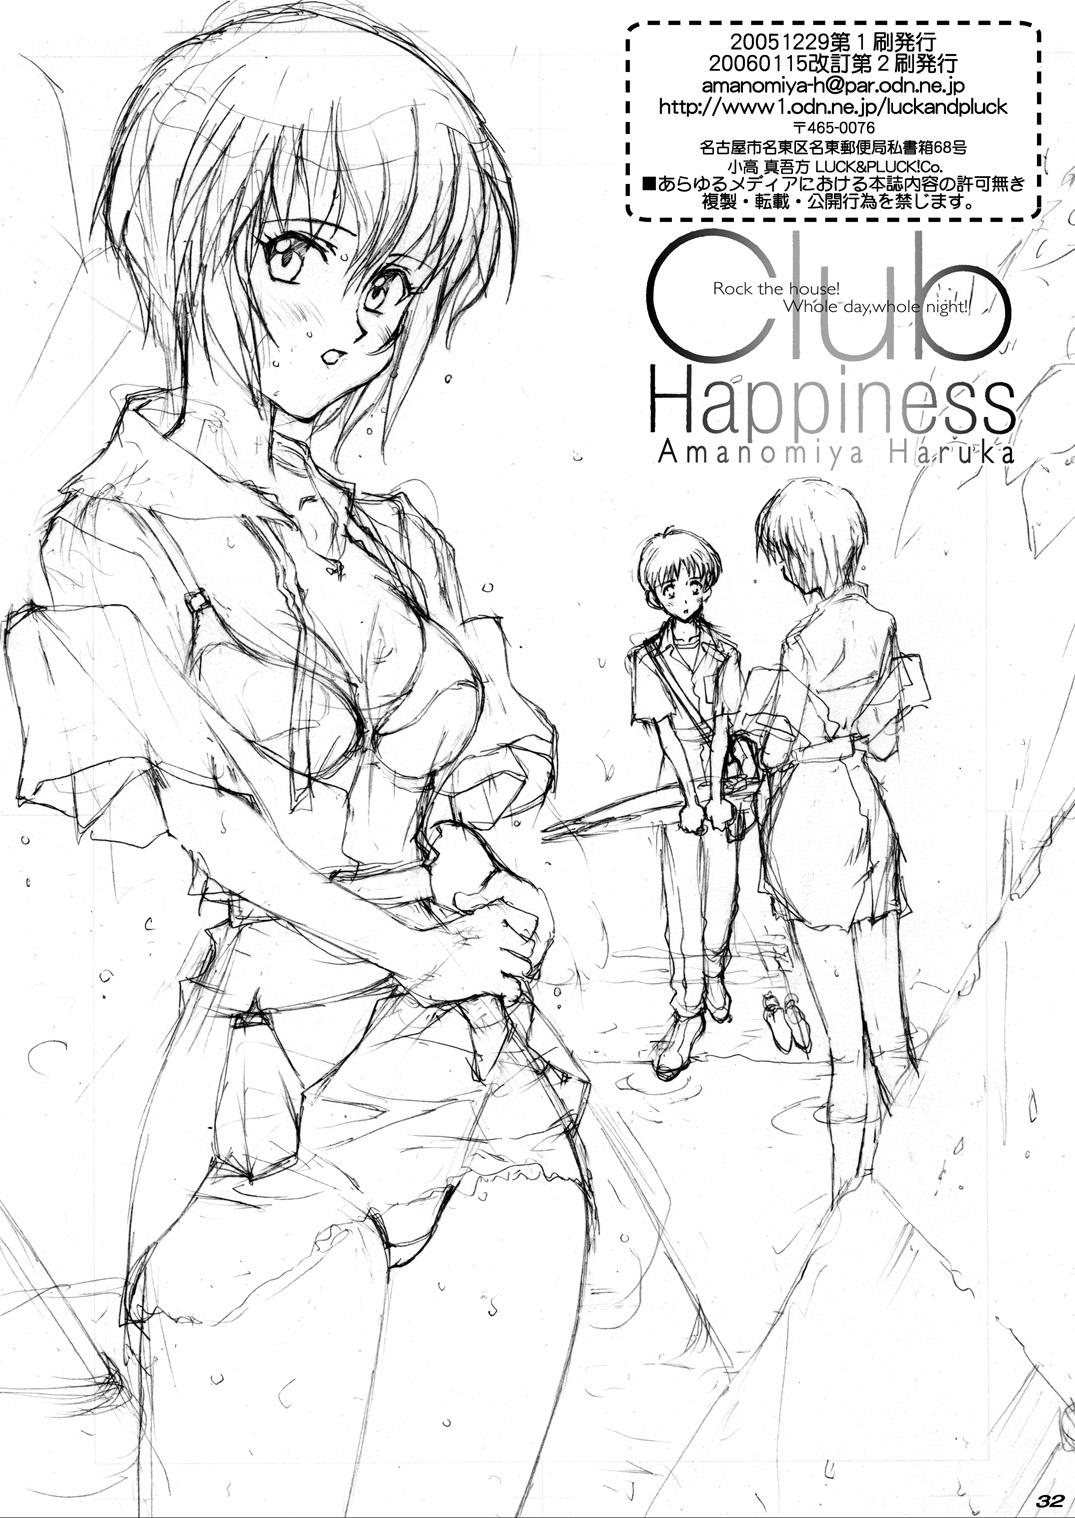 Club Happiness 30